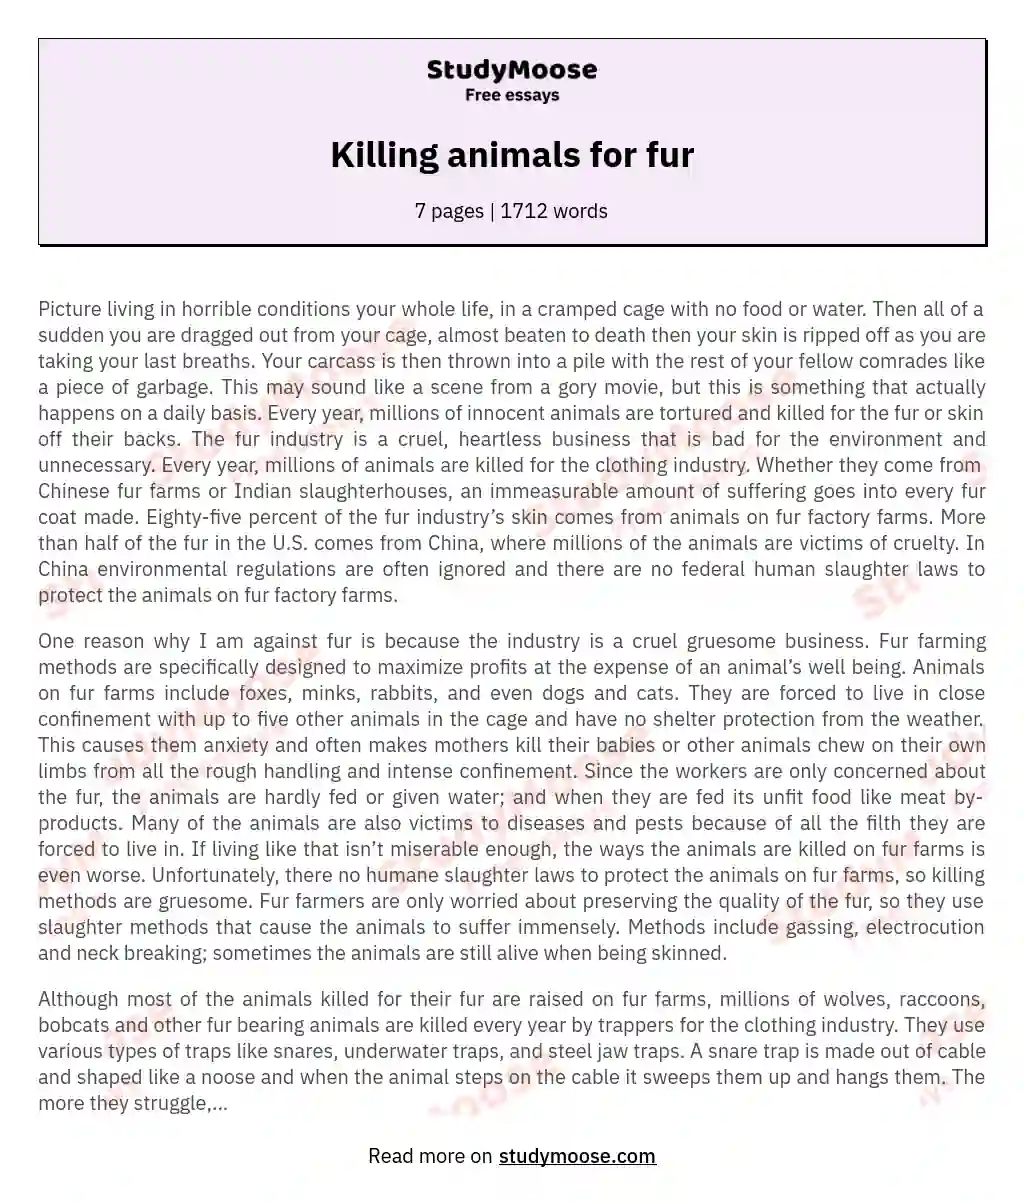 Killing animals for fur essay